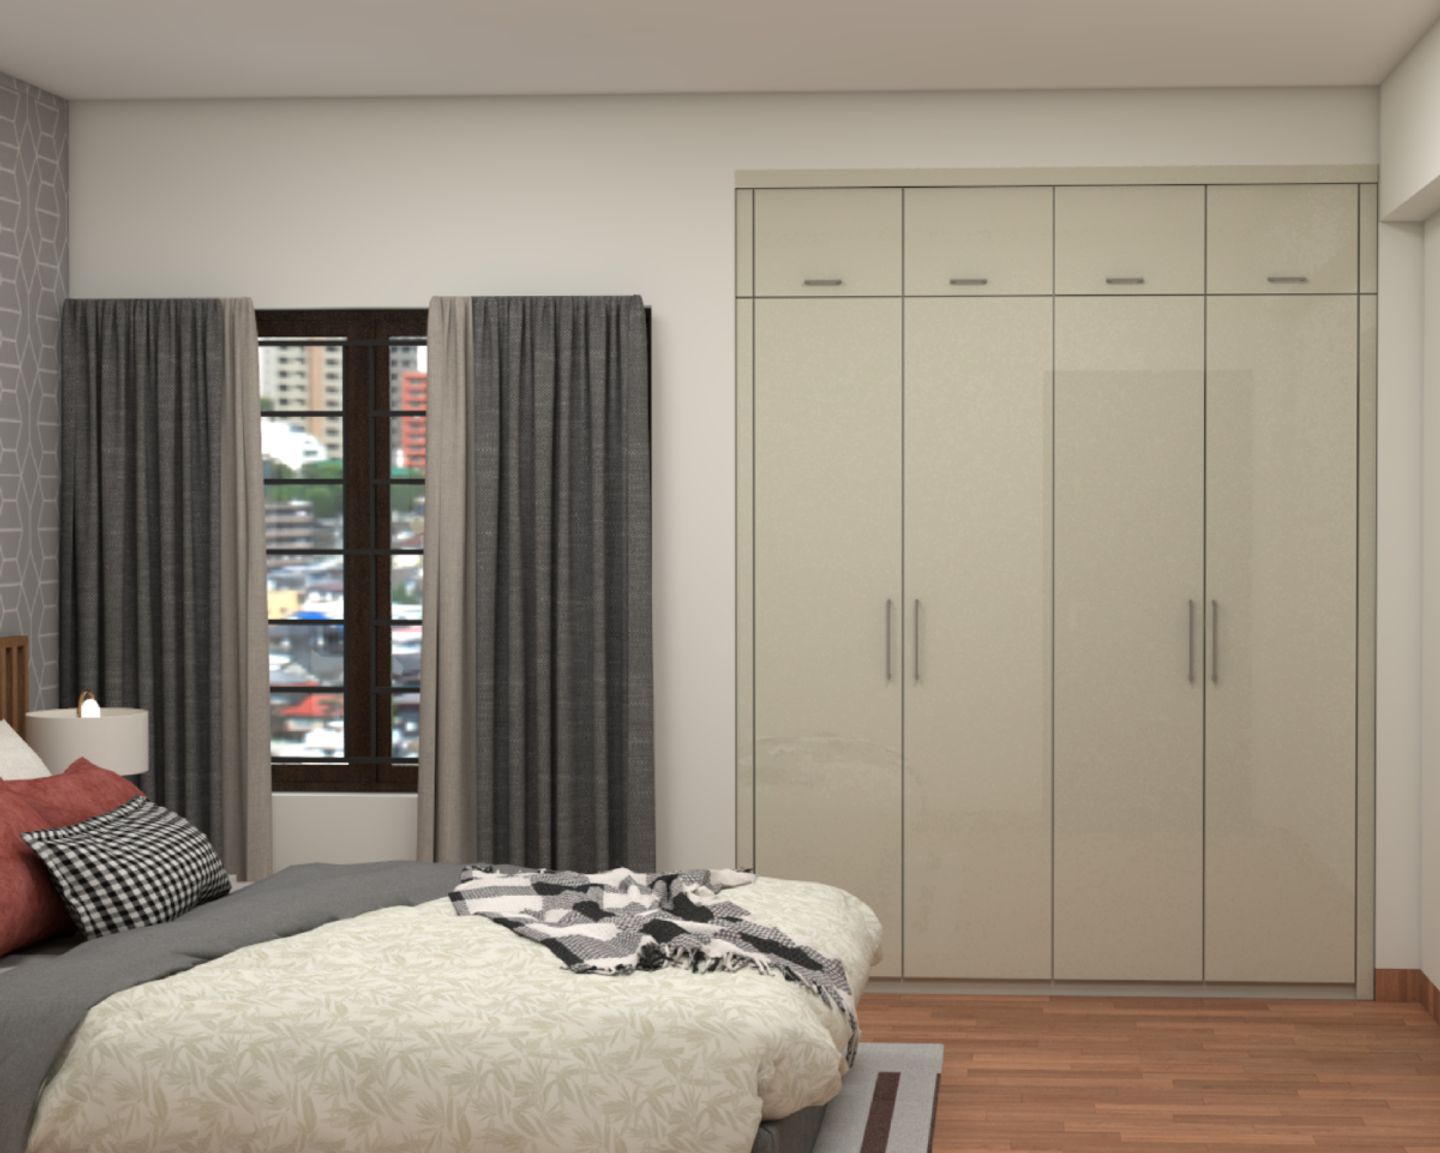 Modern Guest Bedroom Design With Beige Shutters